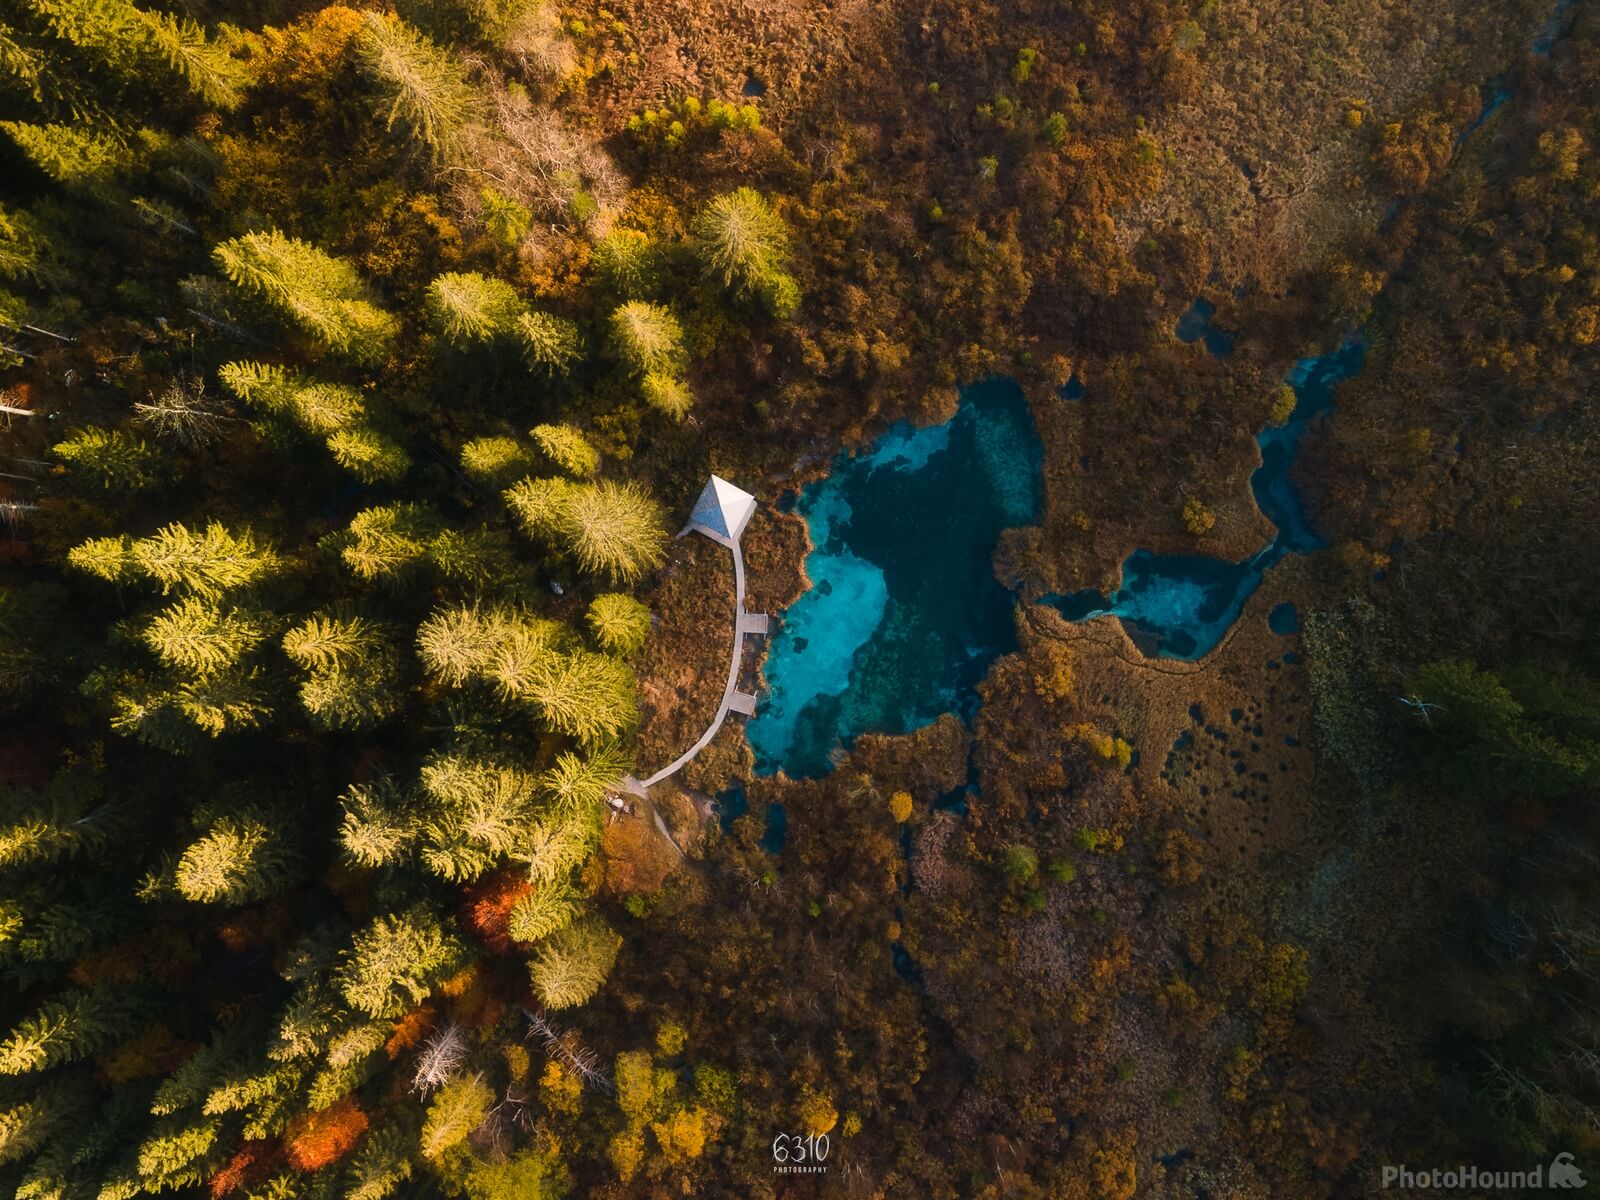 Image of Zelenci Springs by Alan Bučar Vukšić